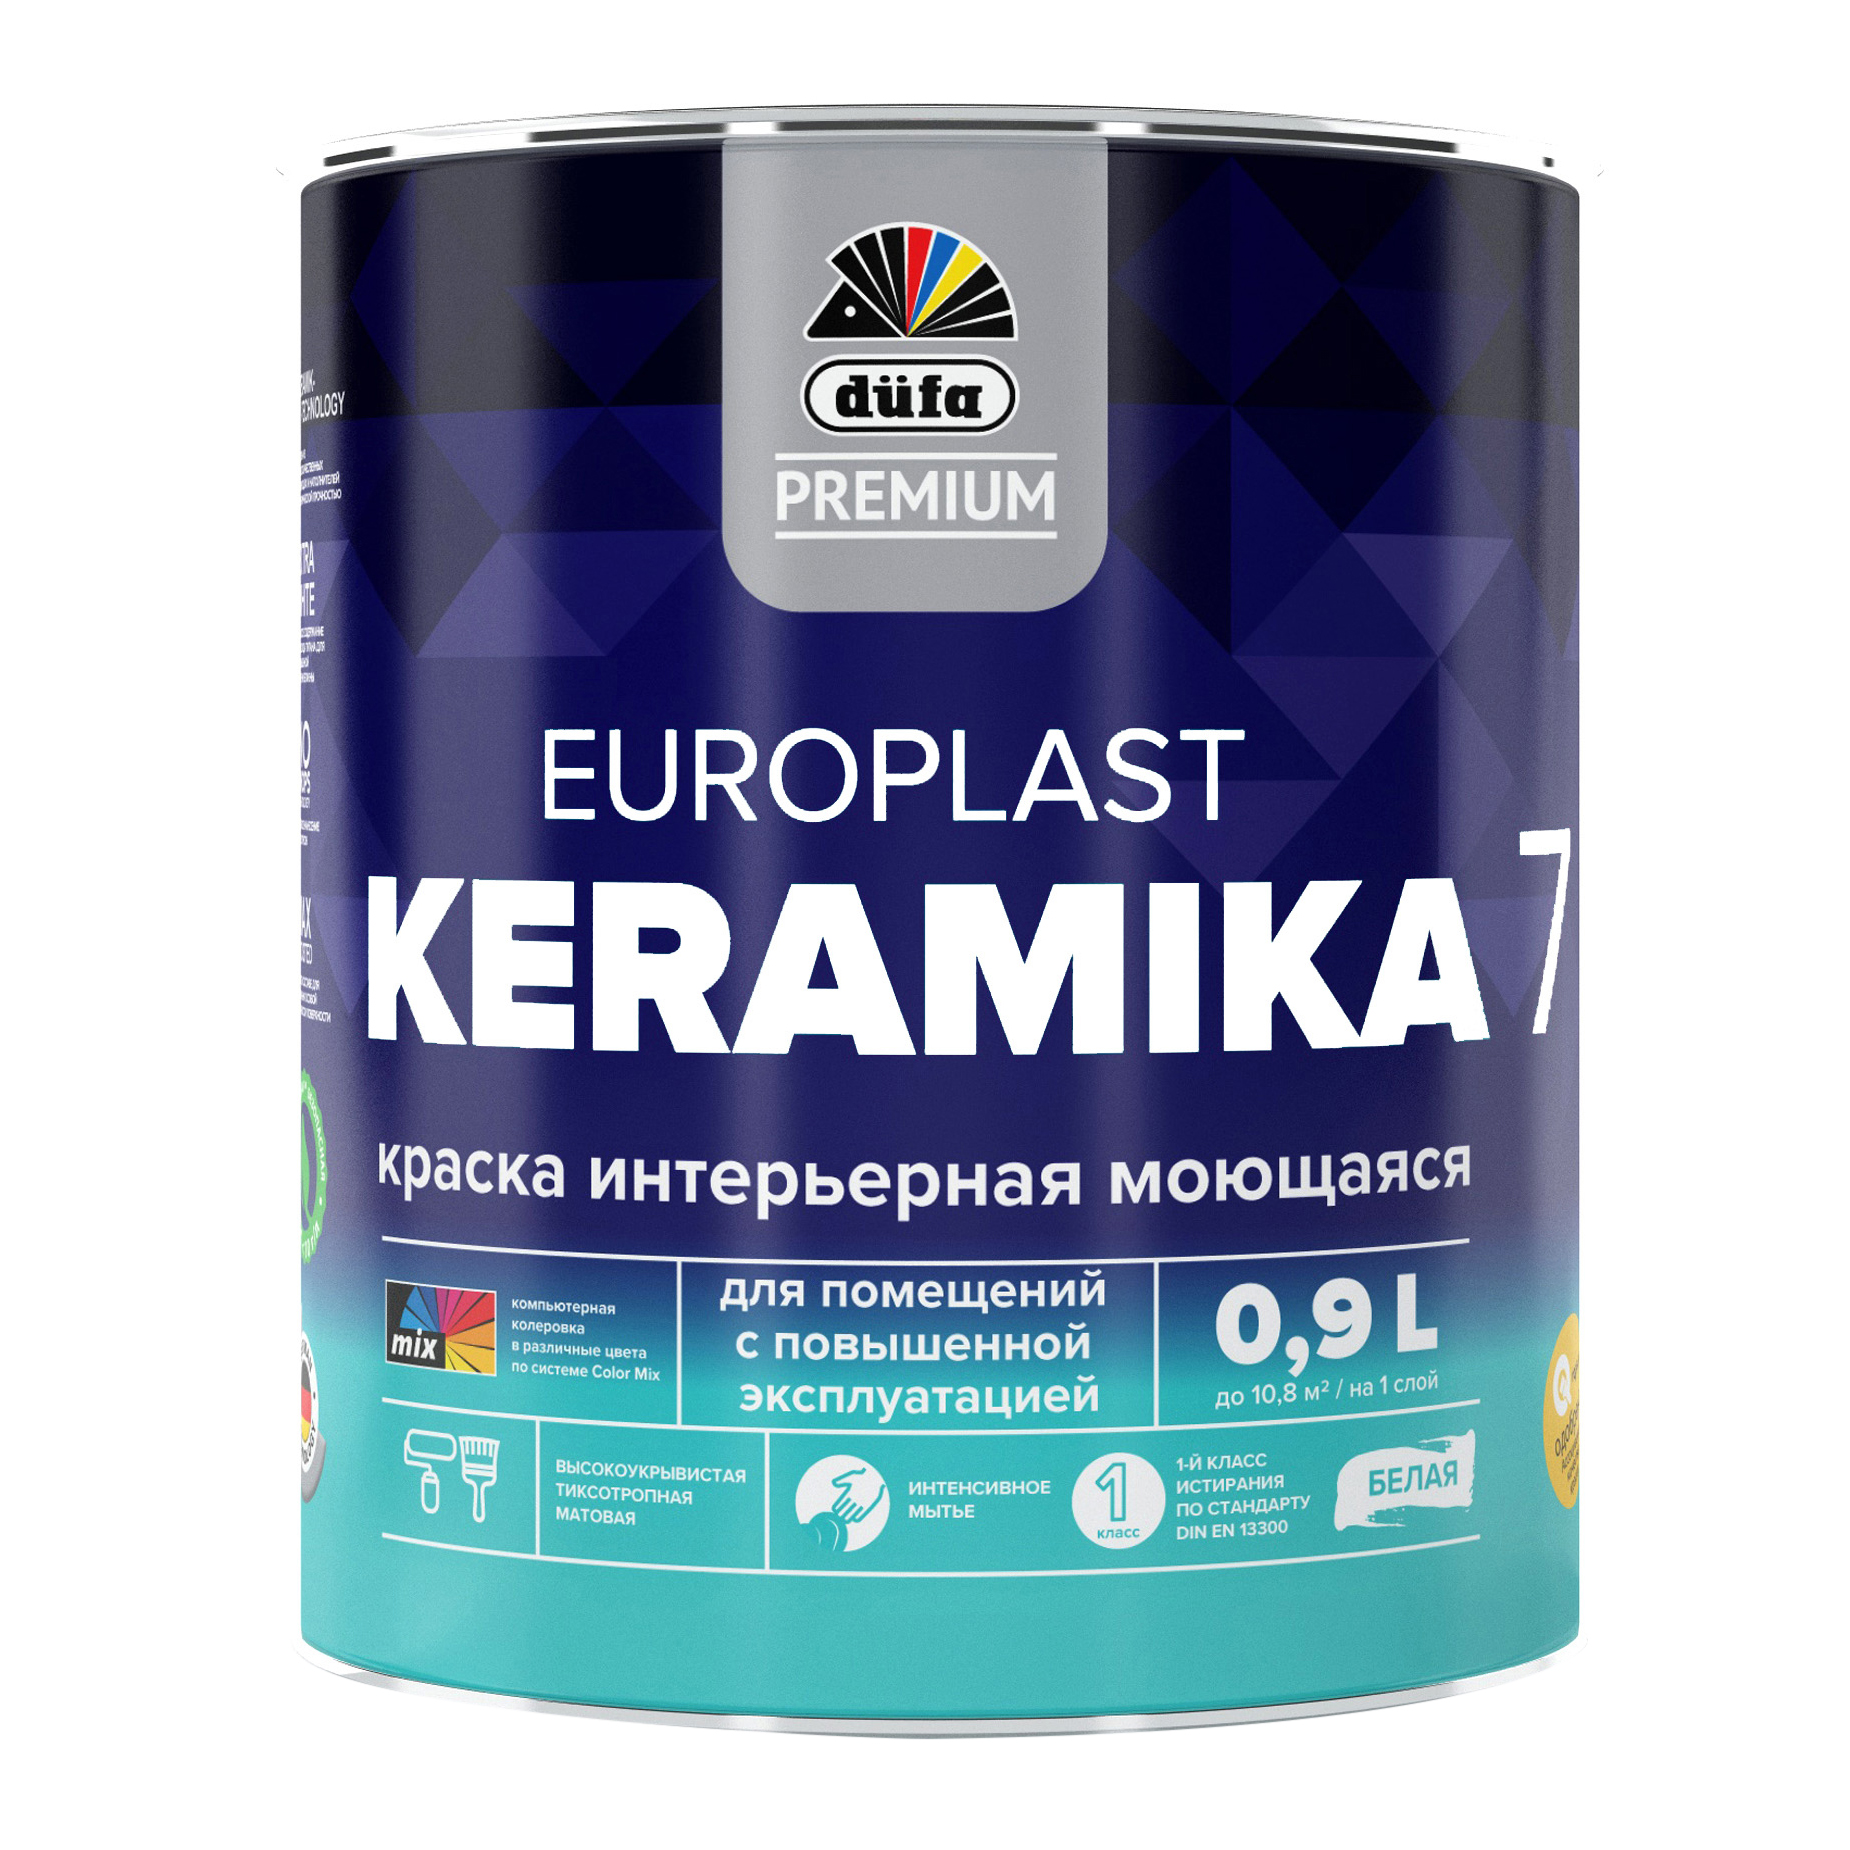 Краска интерьерная Europlast Keramik Matt 0,9л белая (база 1) Dufa Premium